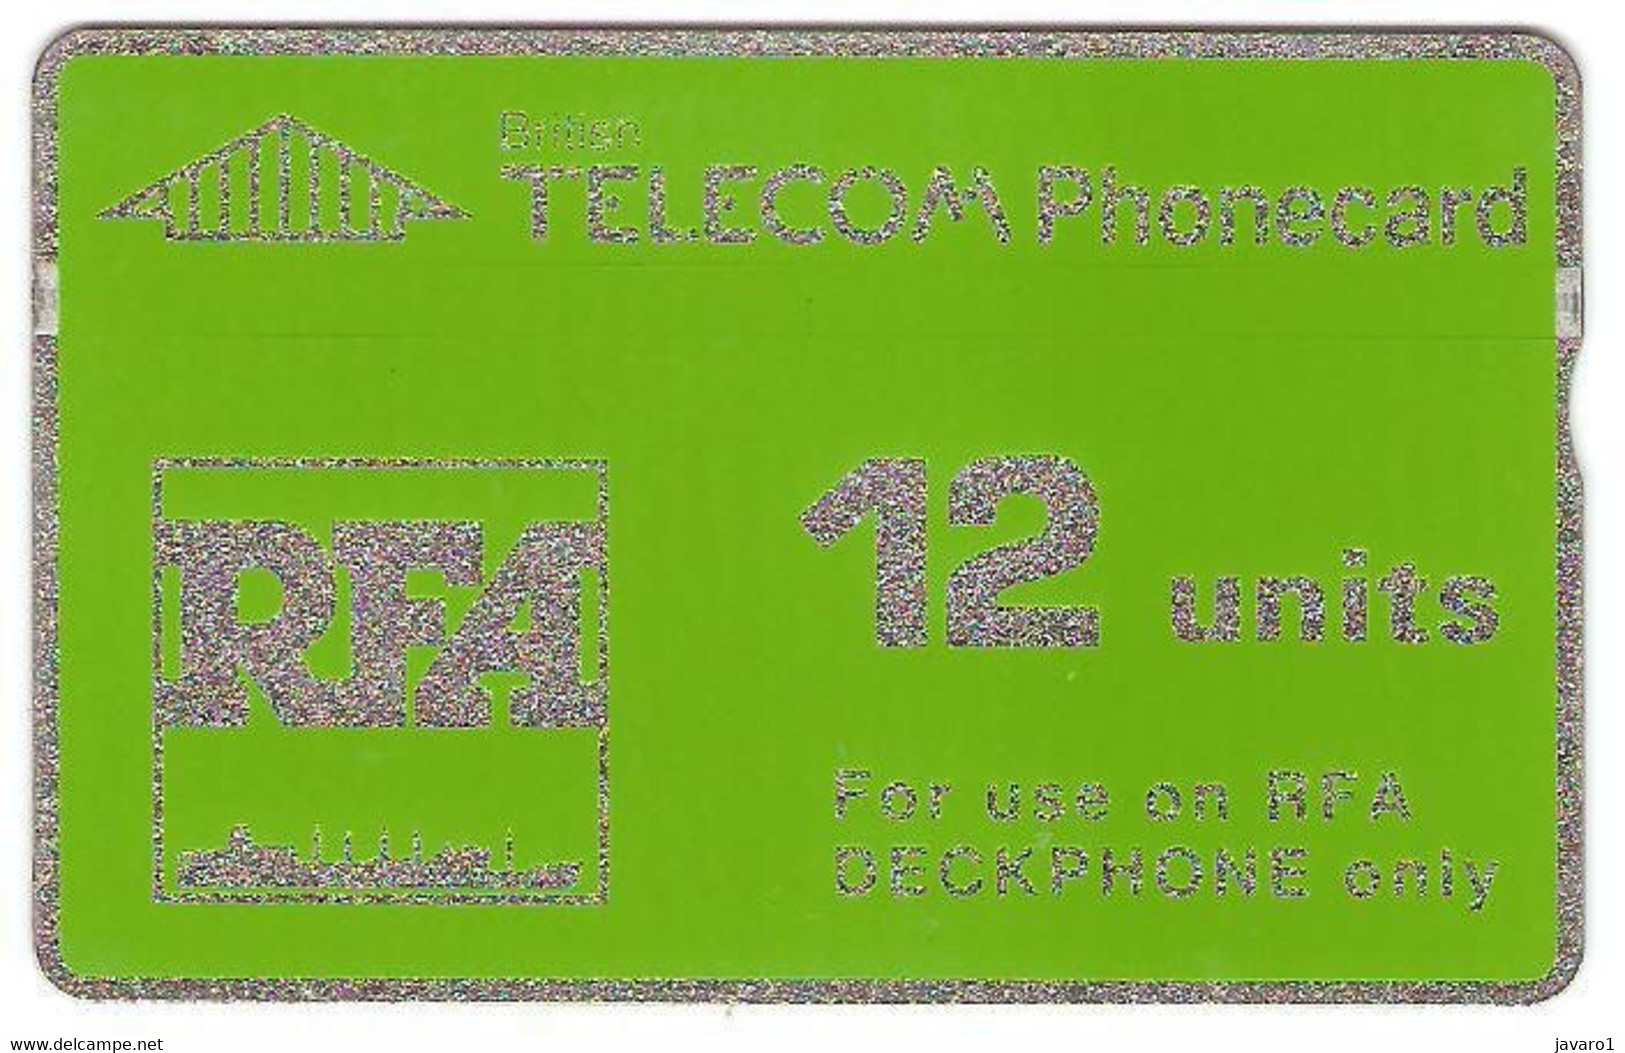 ENGLAND : ENG002 (cux002) 12u RFA Green,silver SATELLITE CARD MINT - Eurostar, Cardlink & Railcall